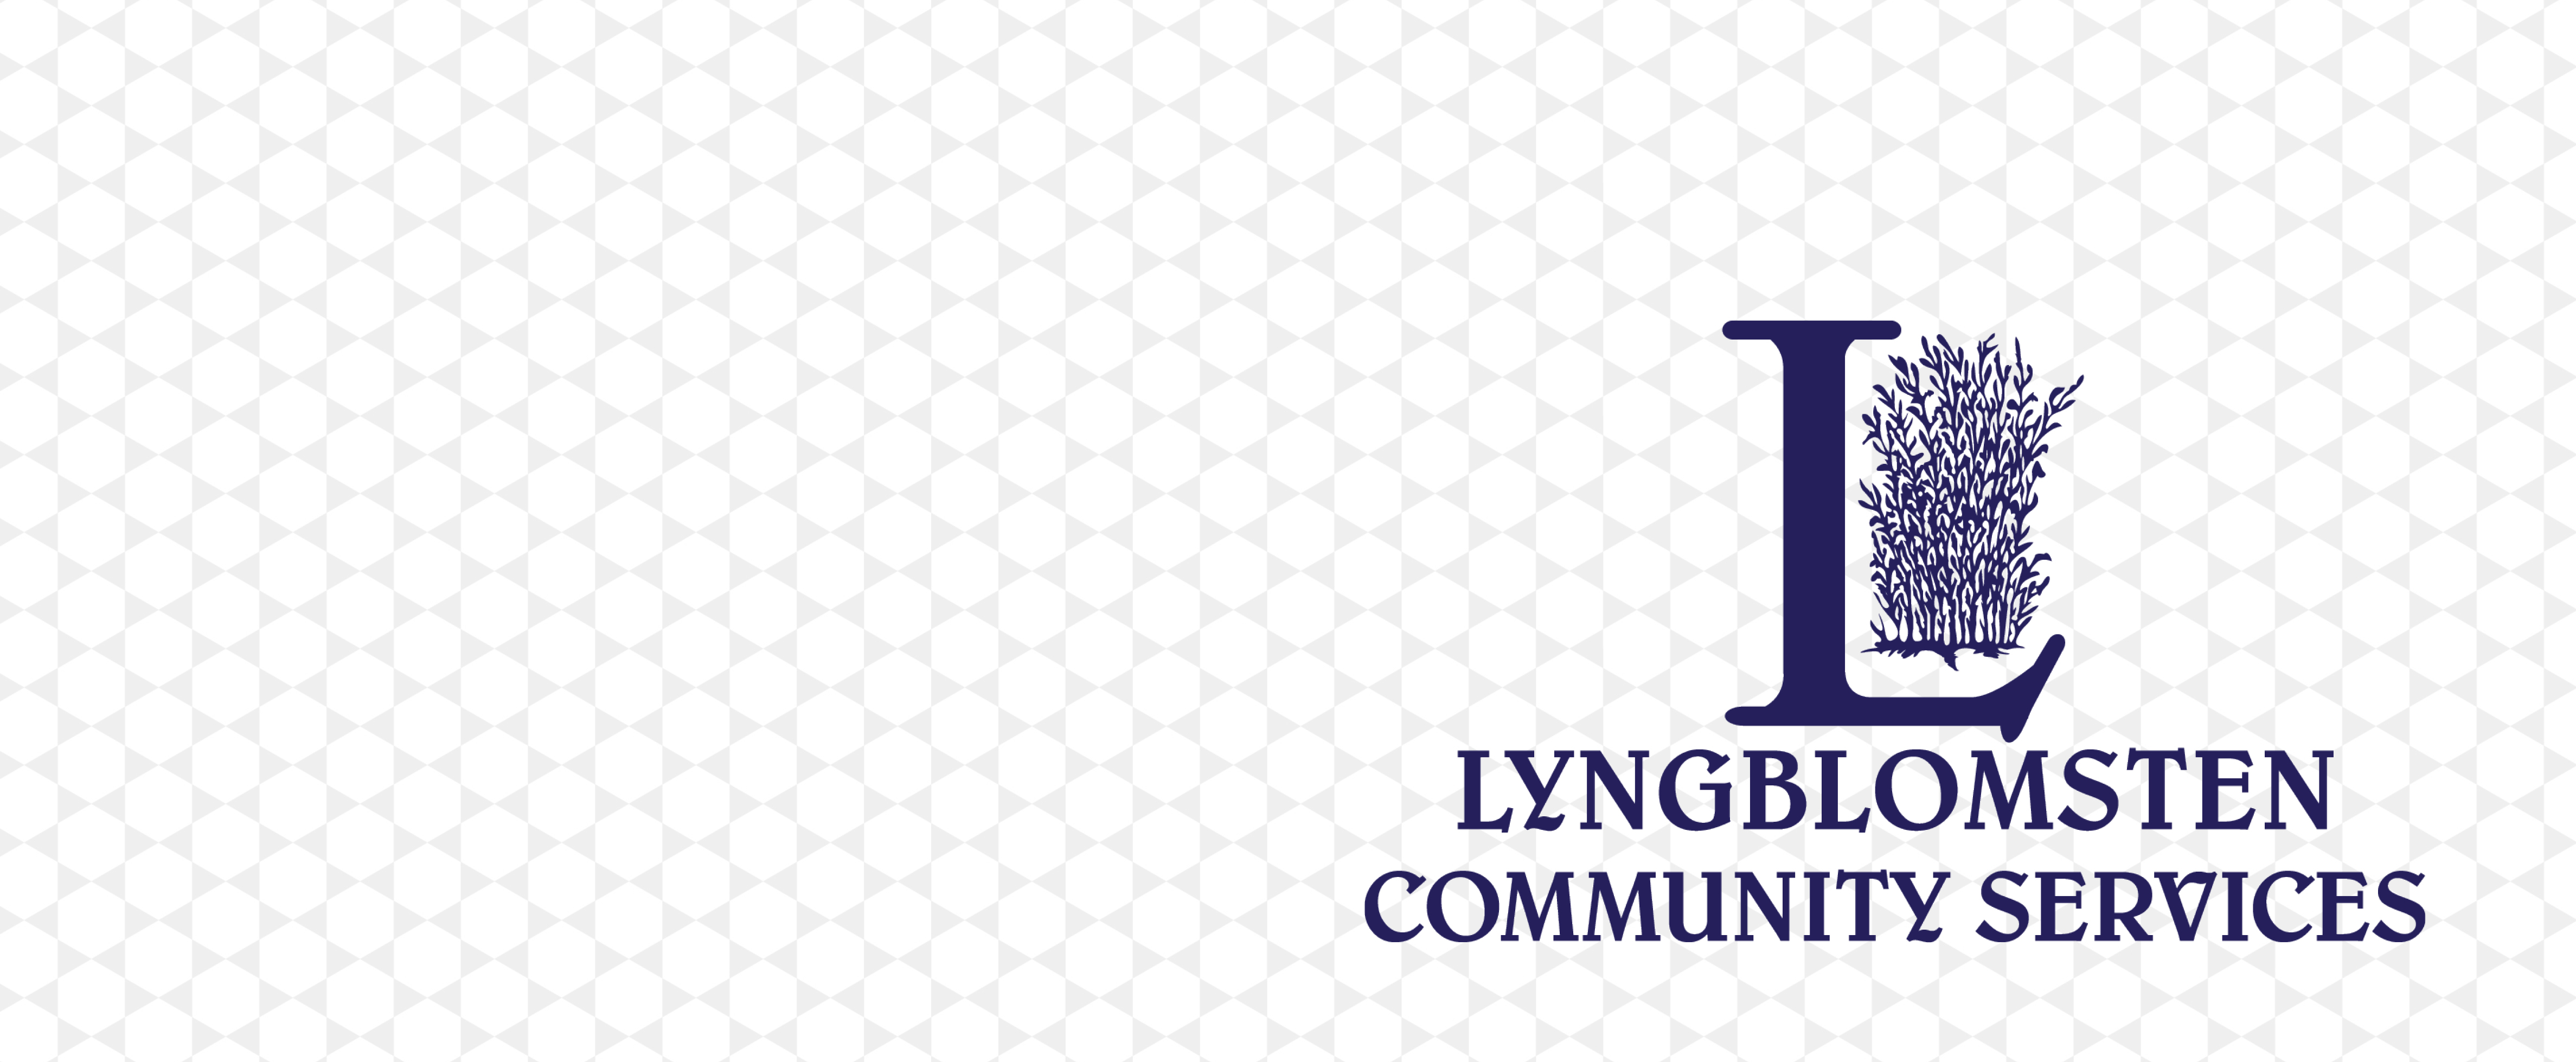 Lyngblomsten Community Services